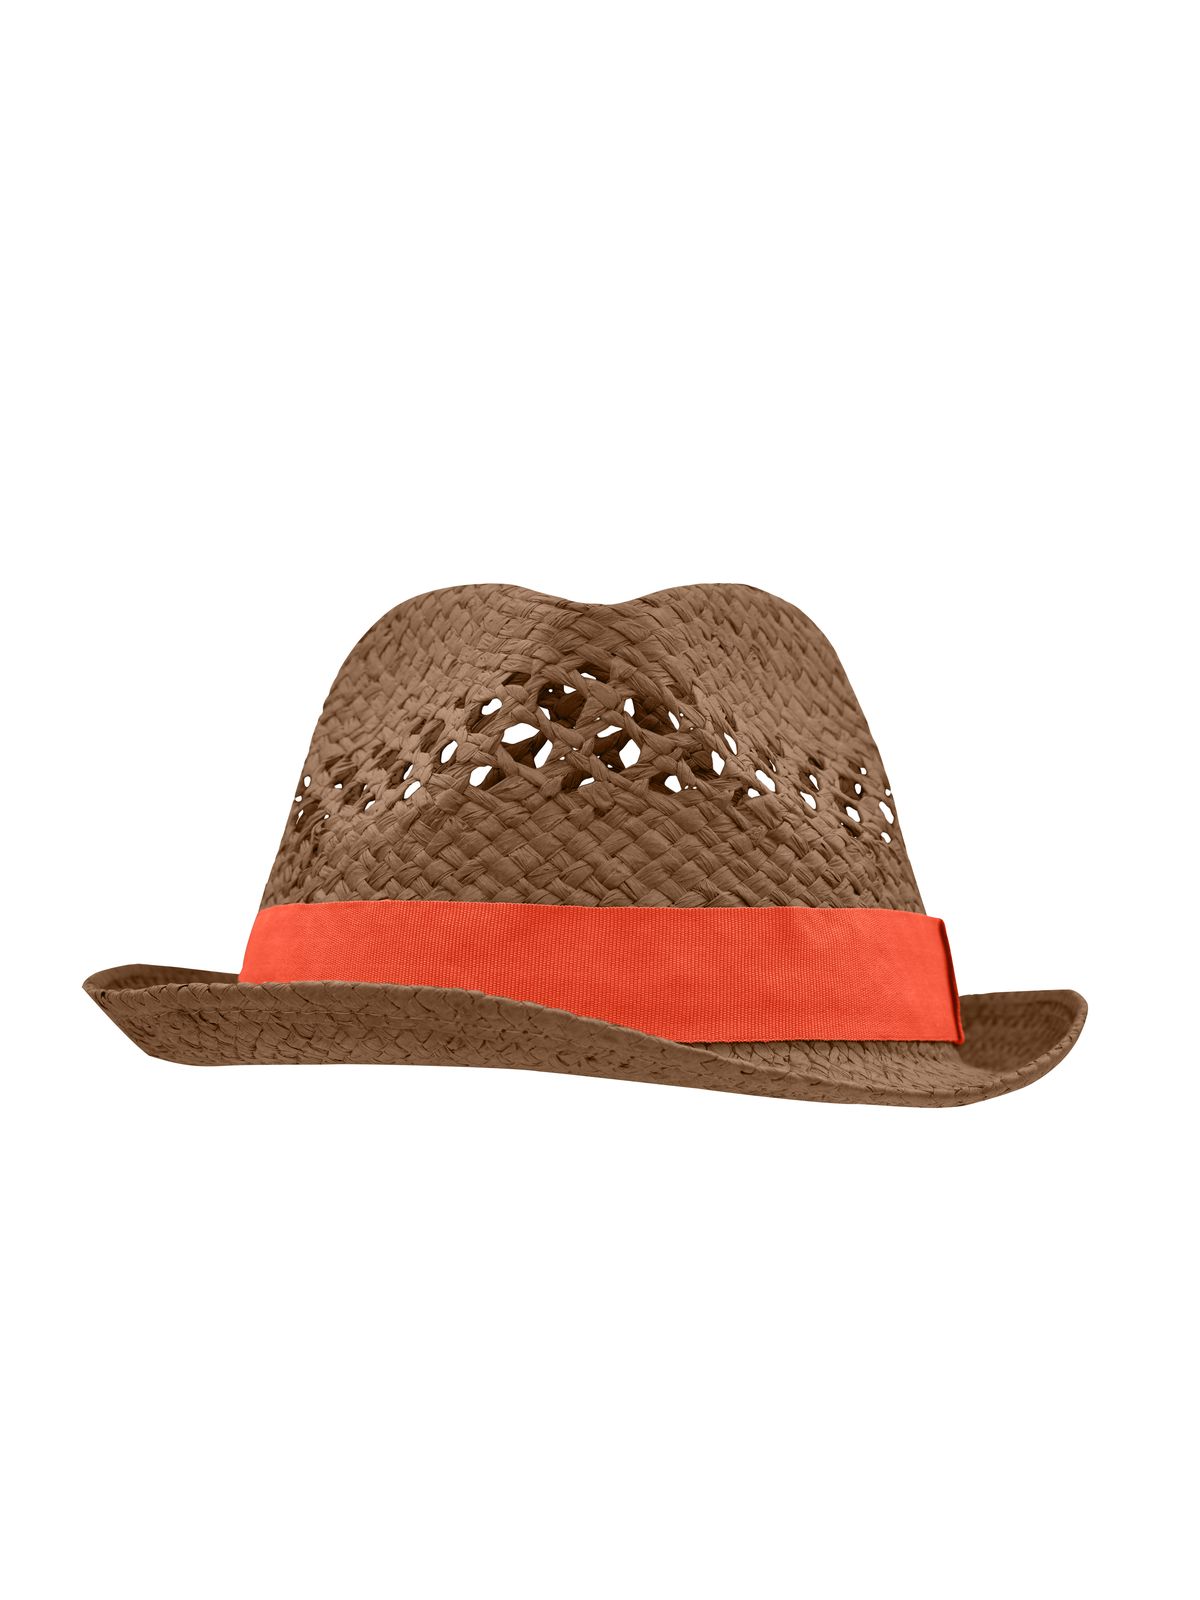 summer-style-hat-nougat-grenadine.webp